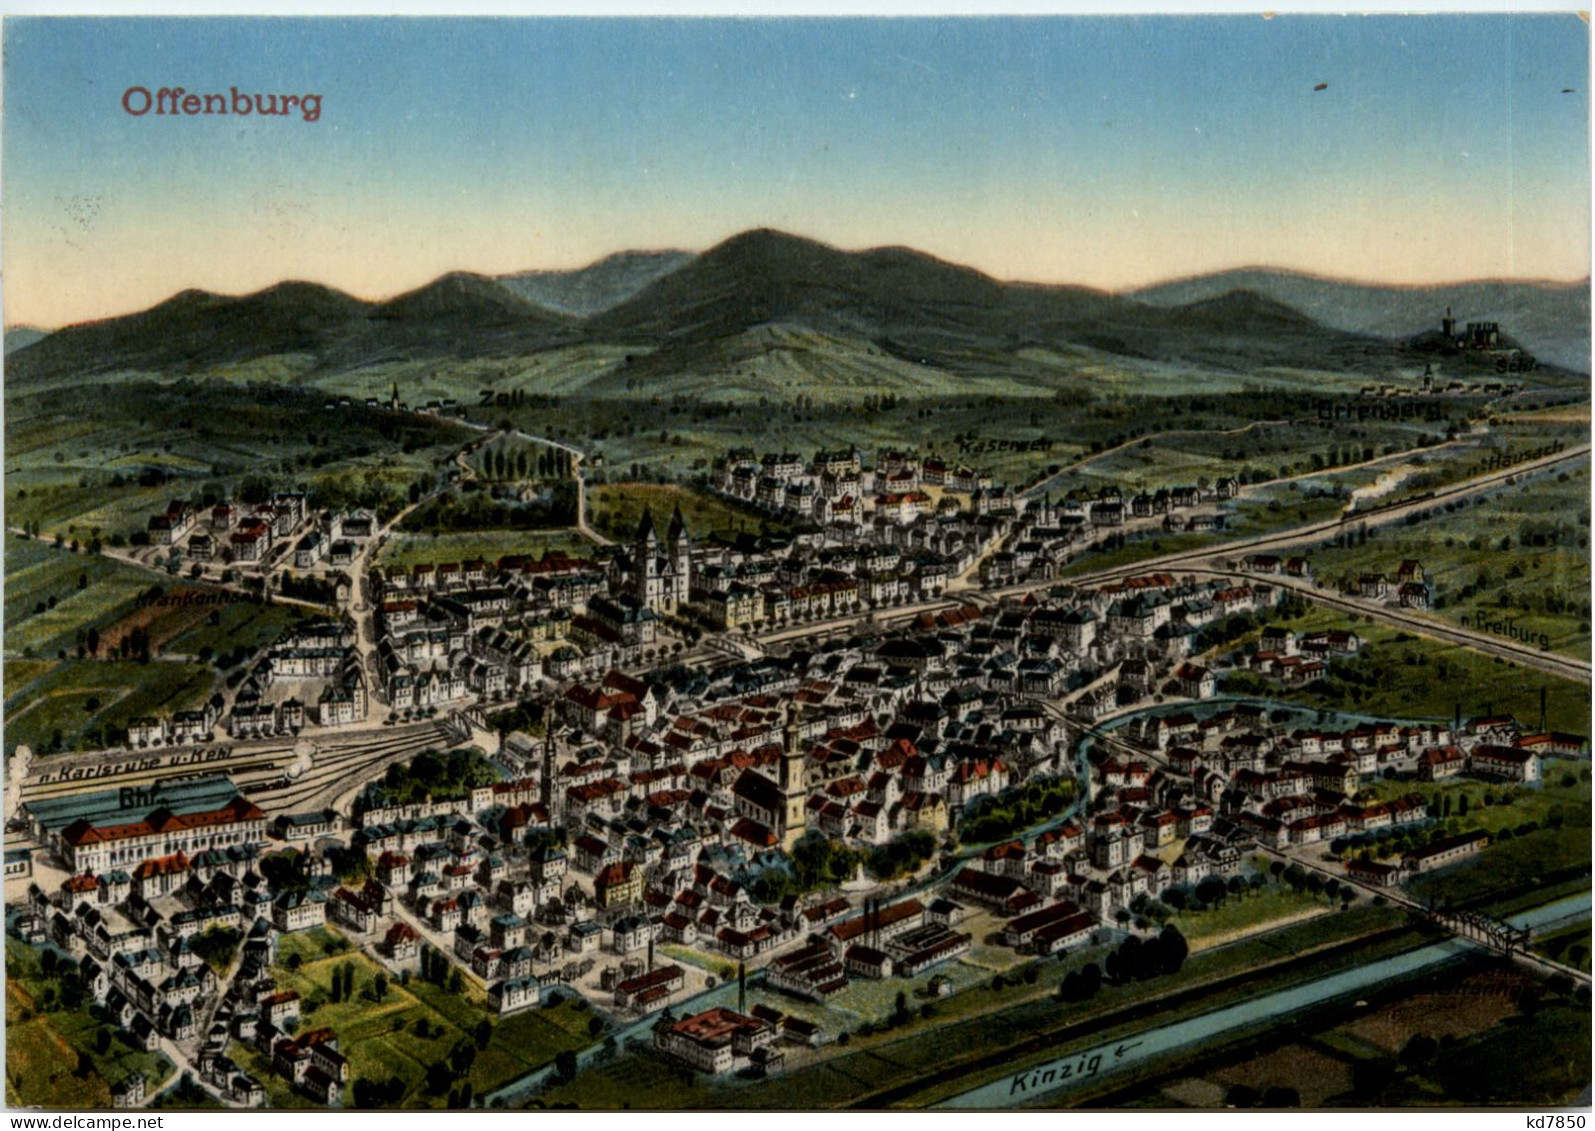 Offenburg - Emmendingen